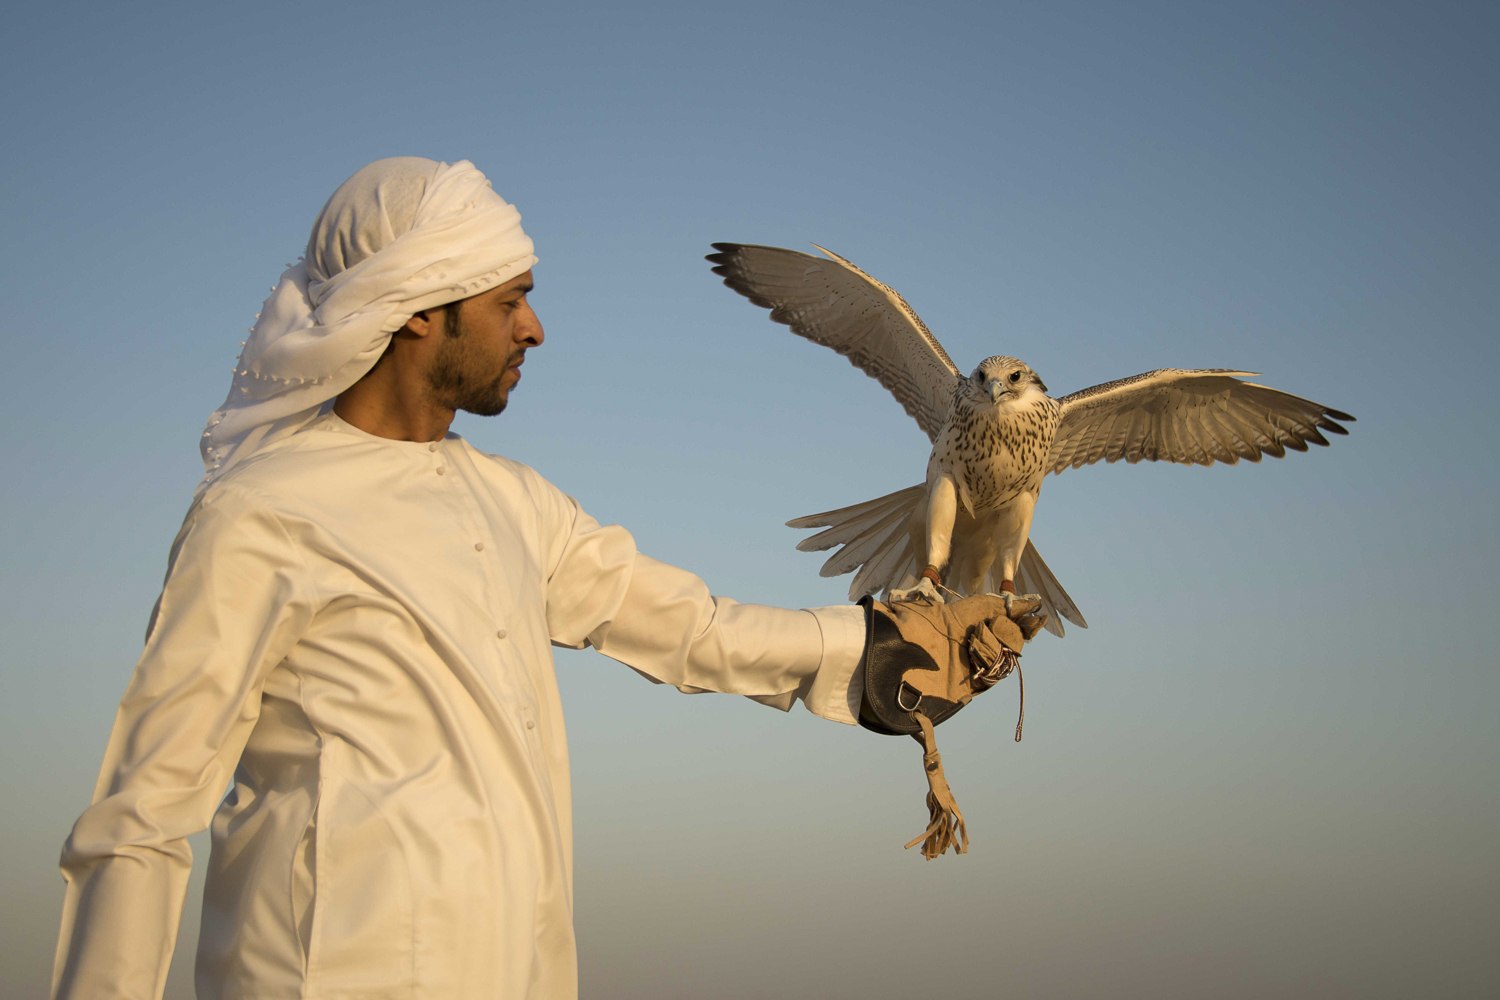 jo-kearney-video-photos-photography-travel-portraits-prints-for-sale-falconry-dubai-desert-falcon-uae-emirati.jpg